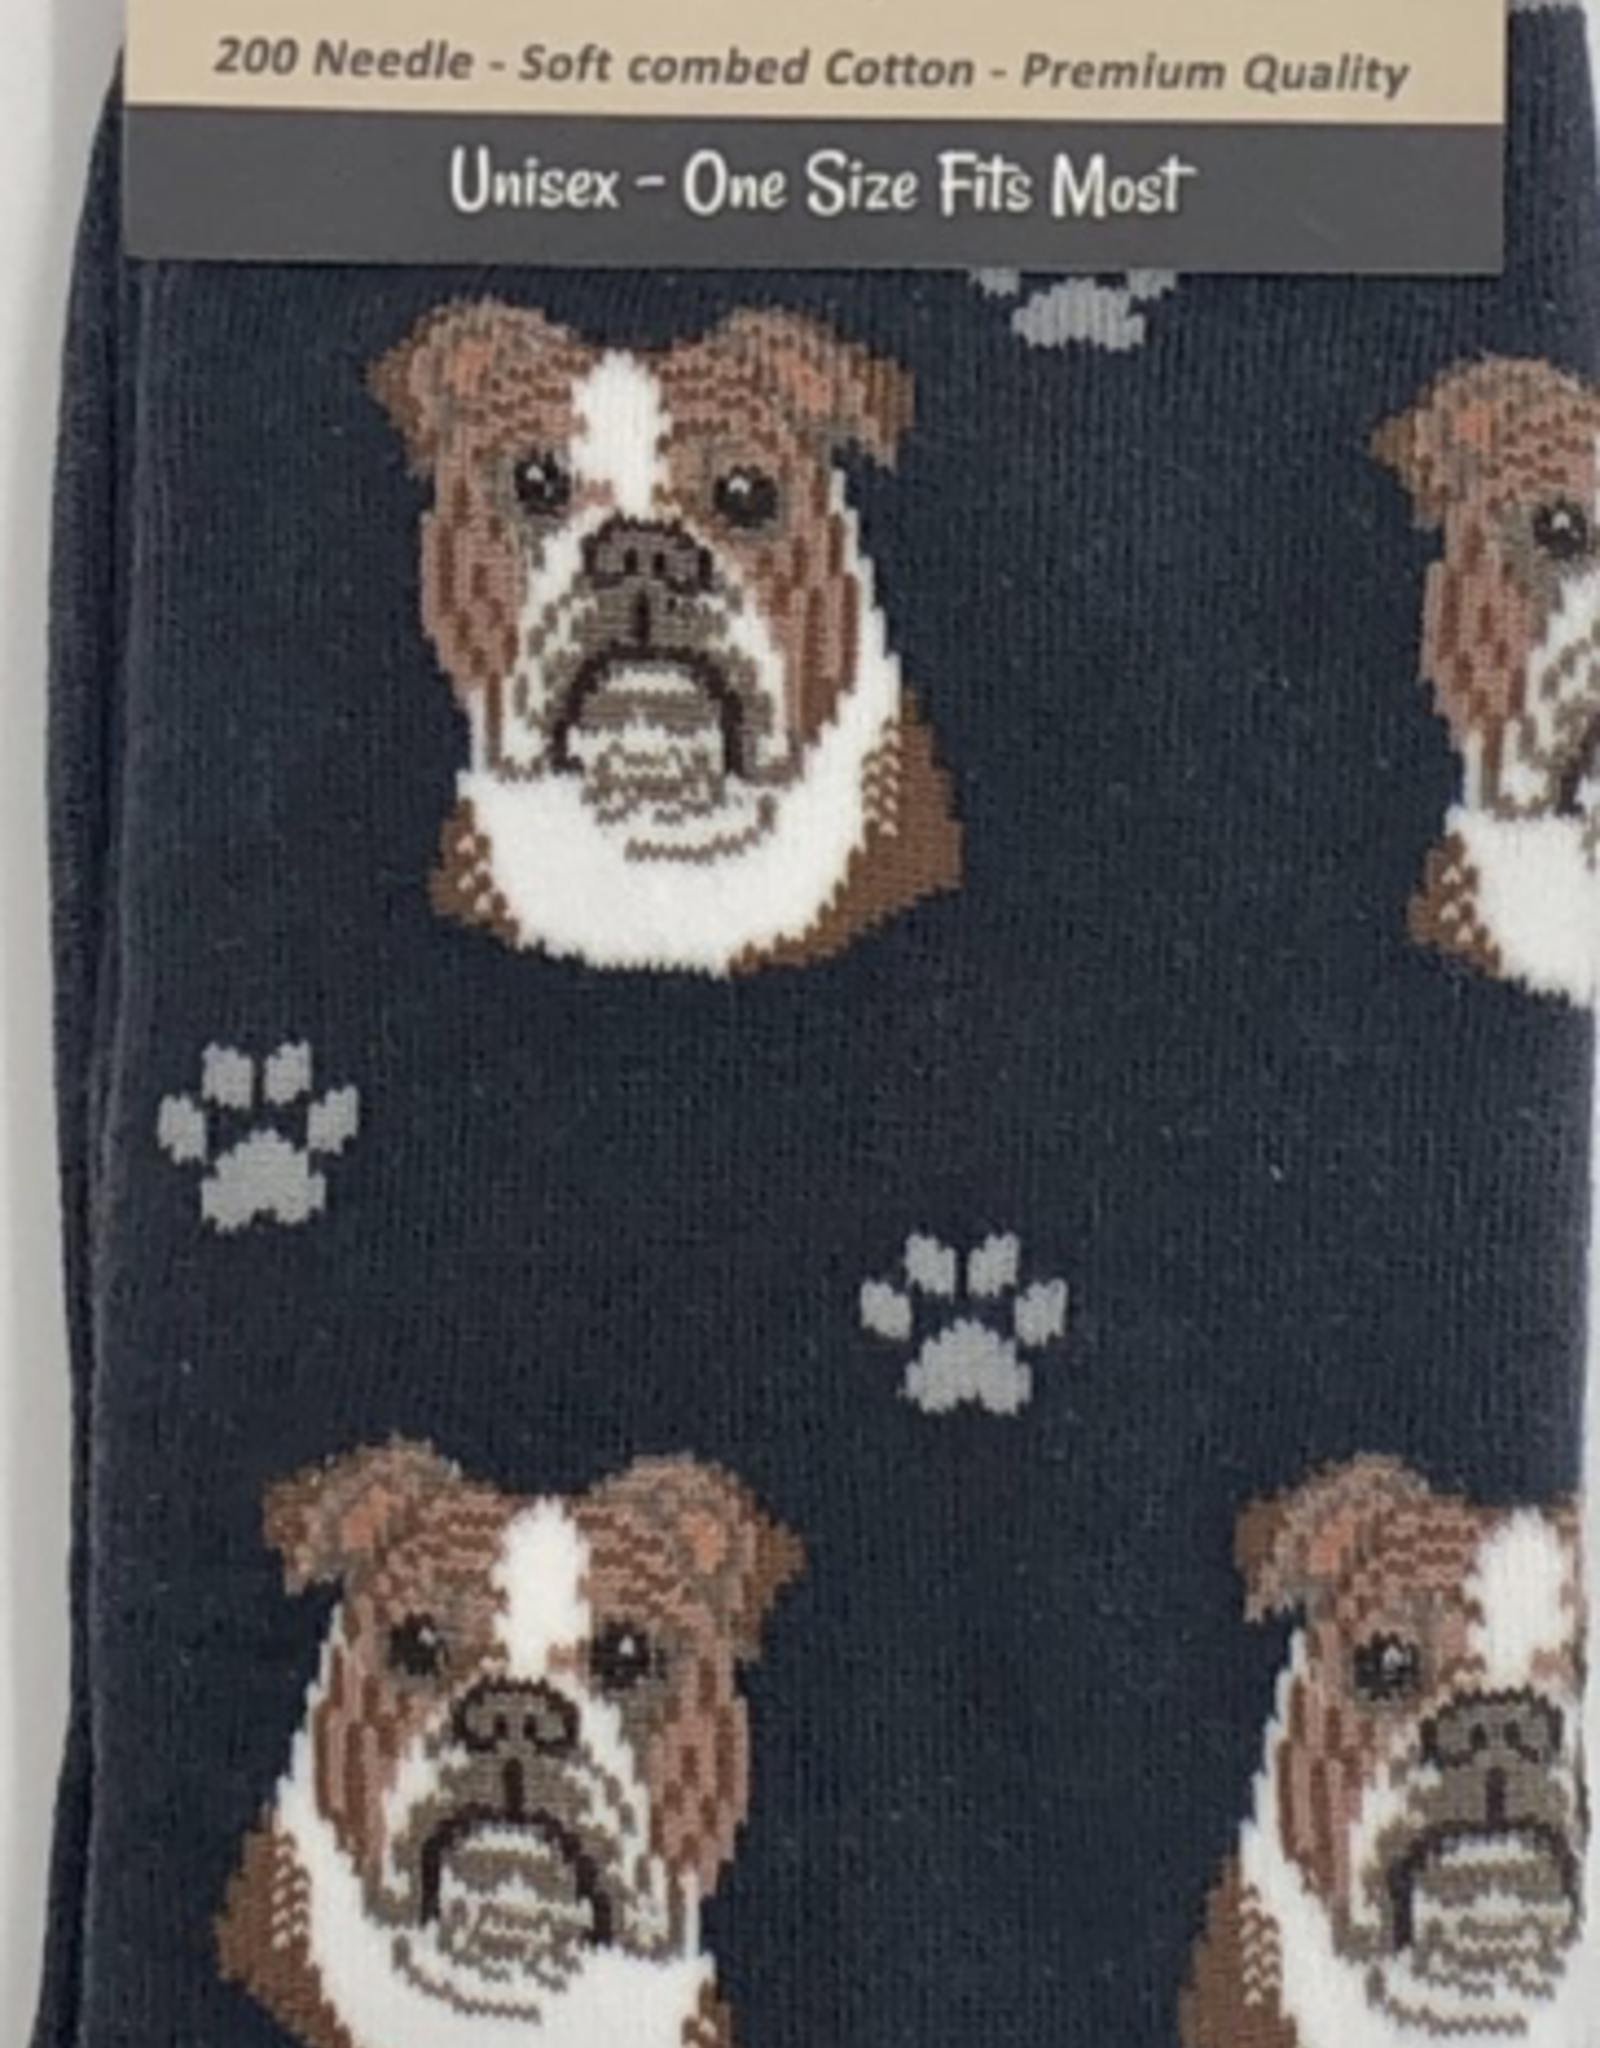 E&S Pets E & S Pets: Bulldog Socks